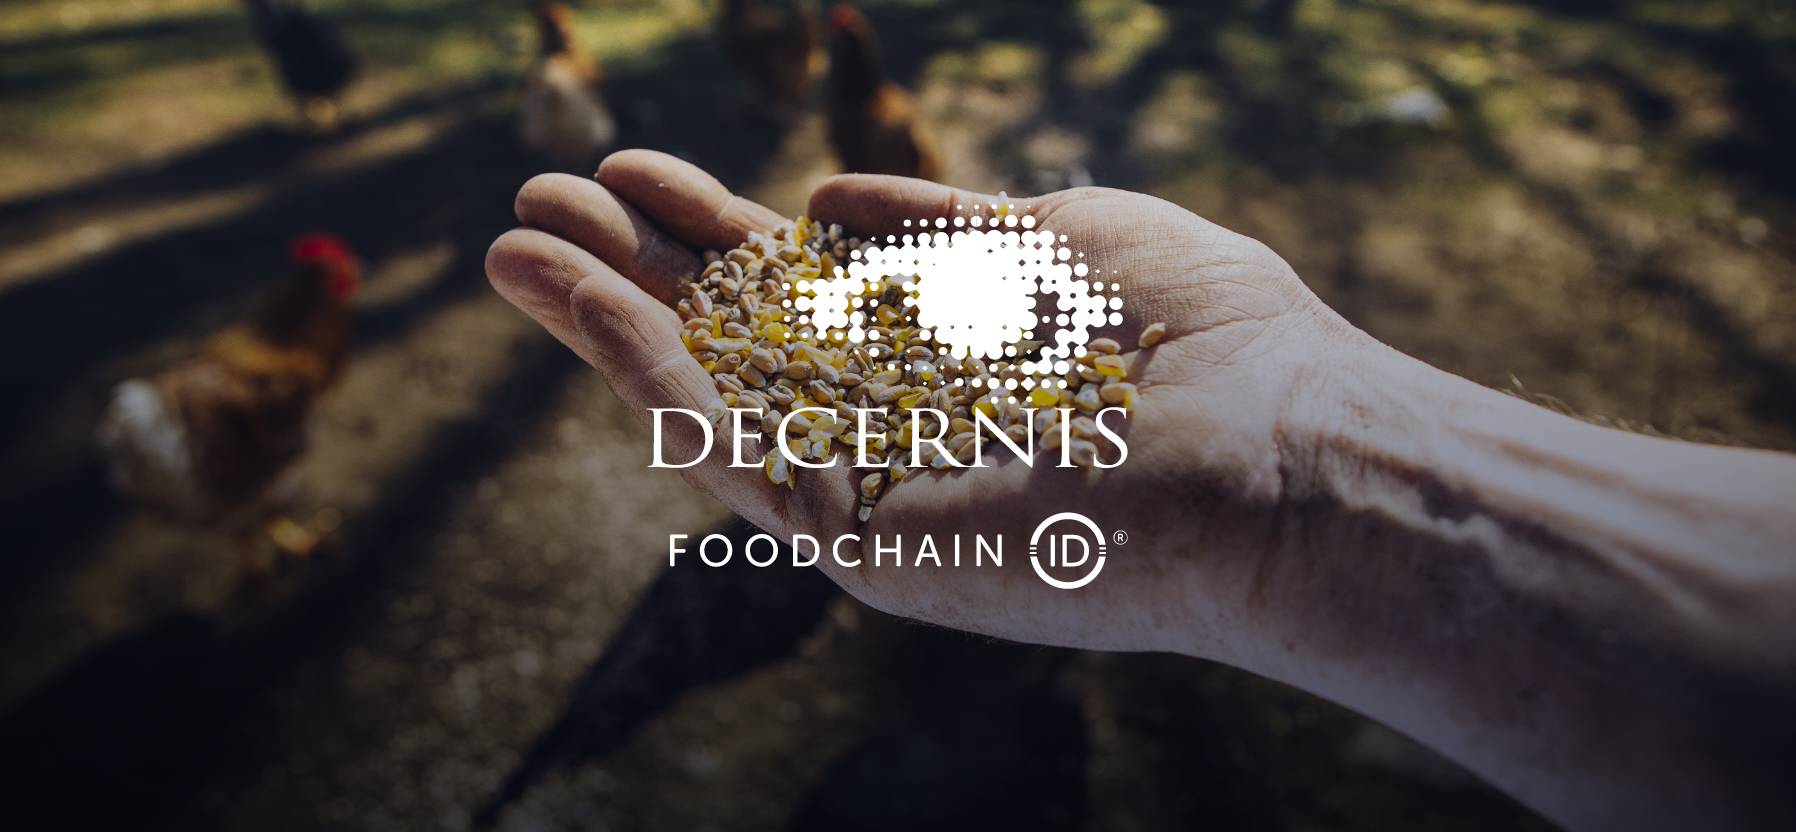 FoodChain ID Acquires Decernis@2x